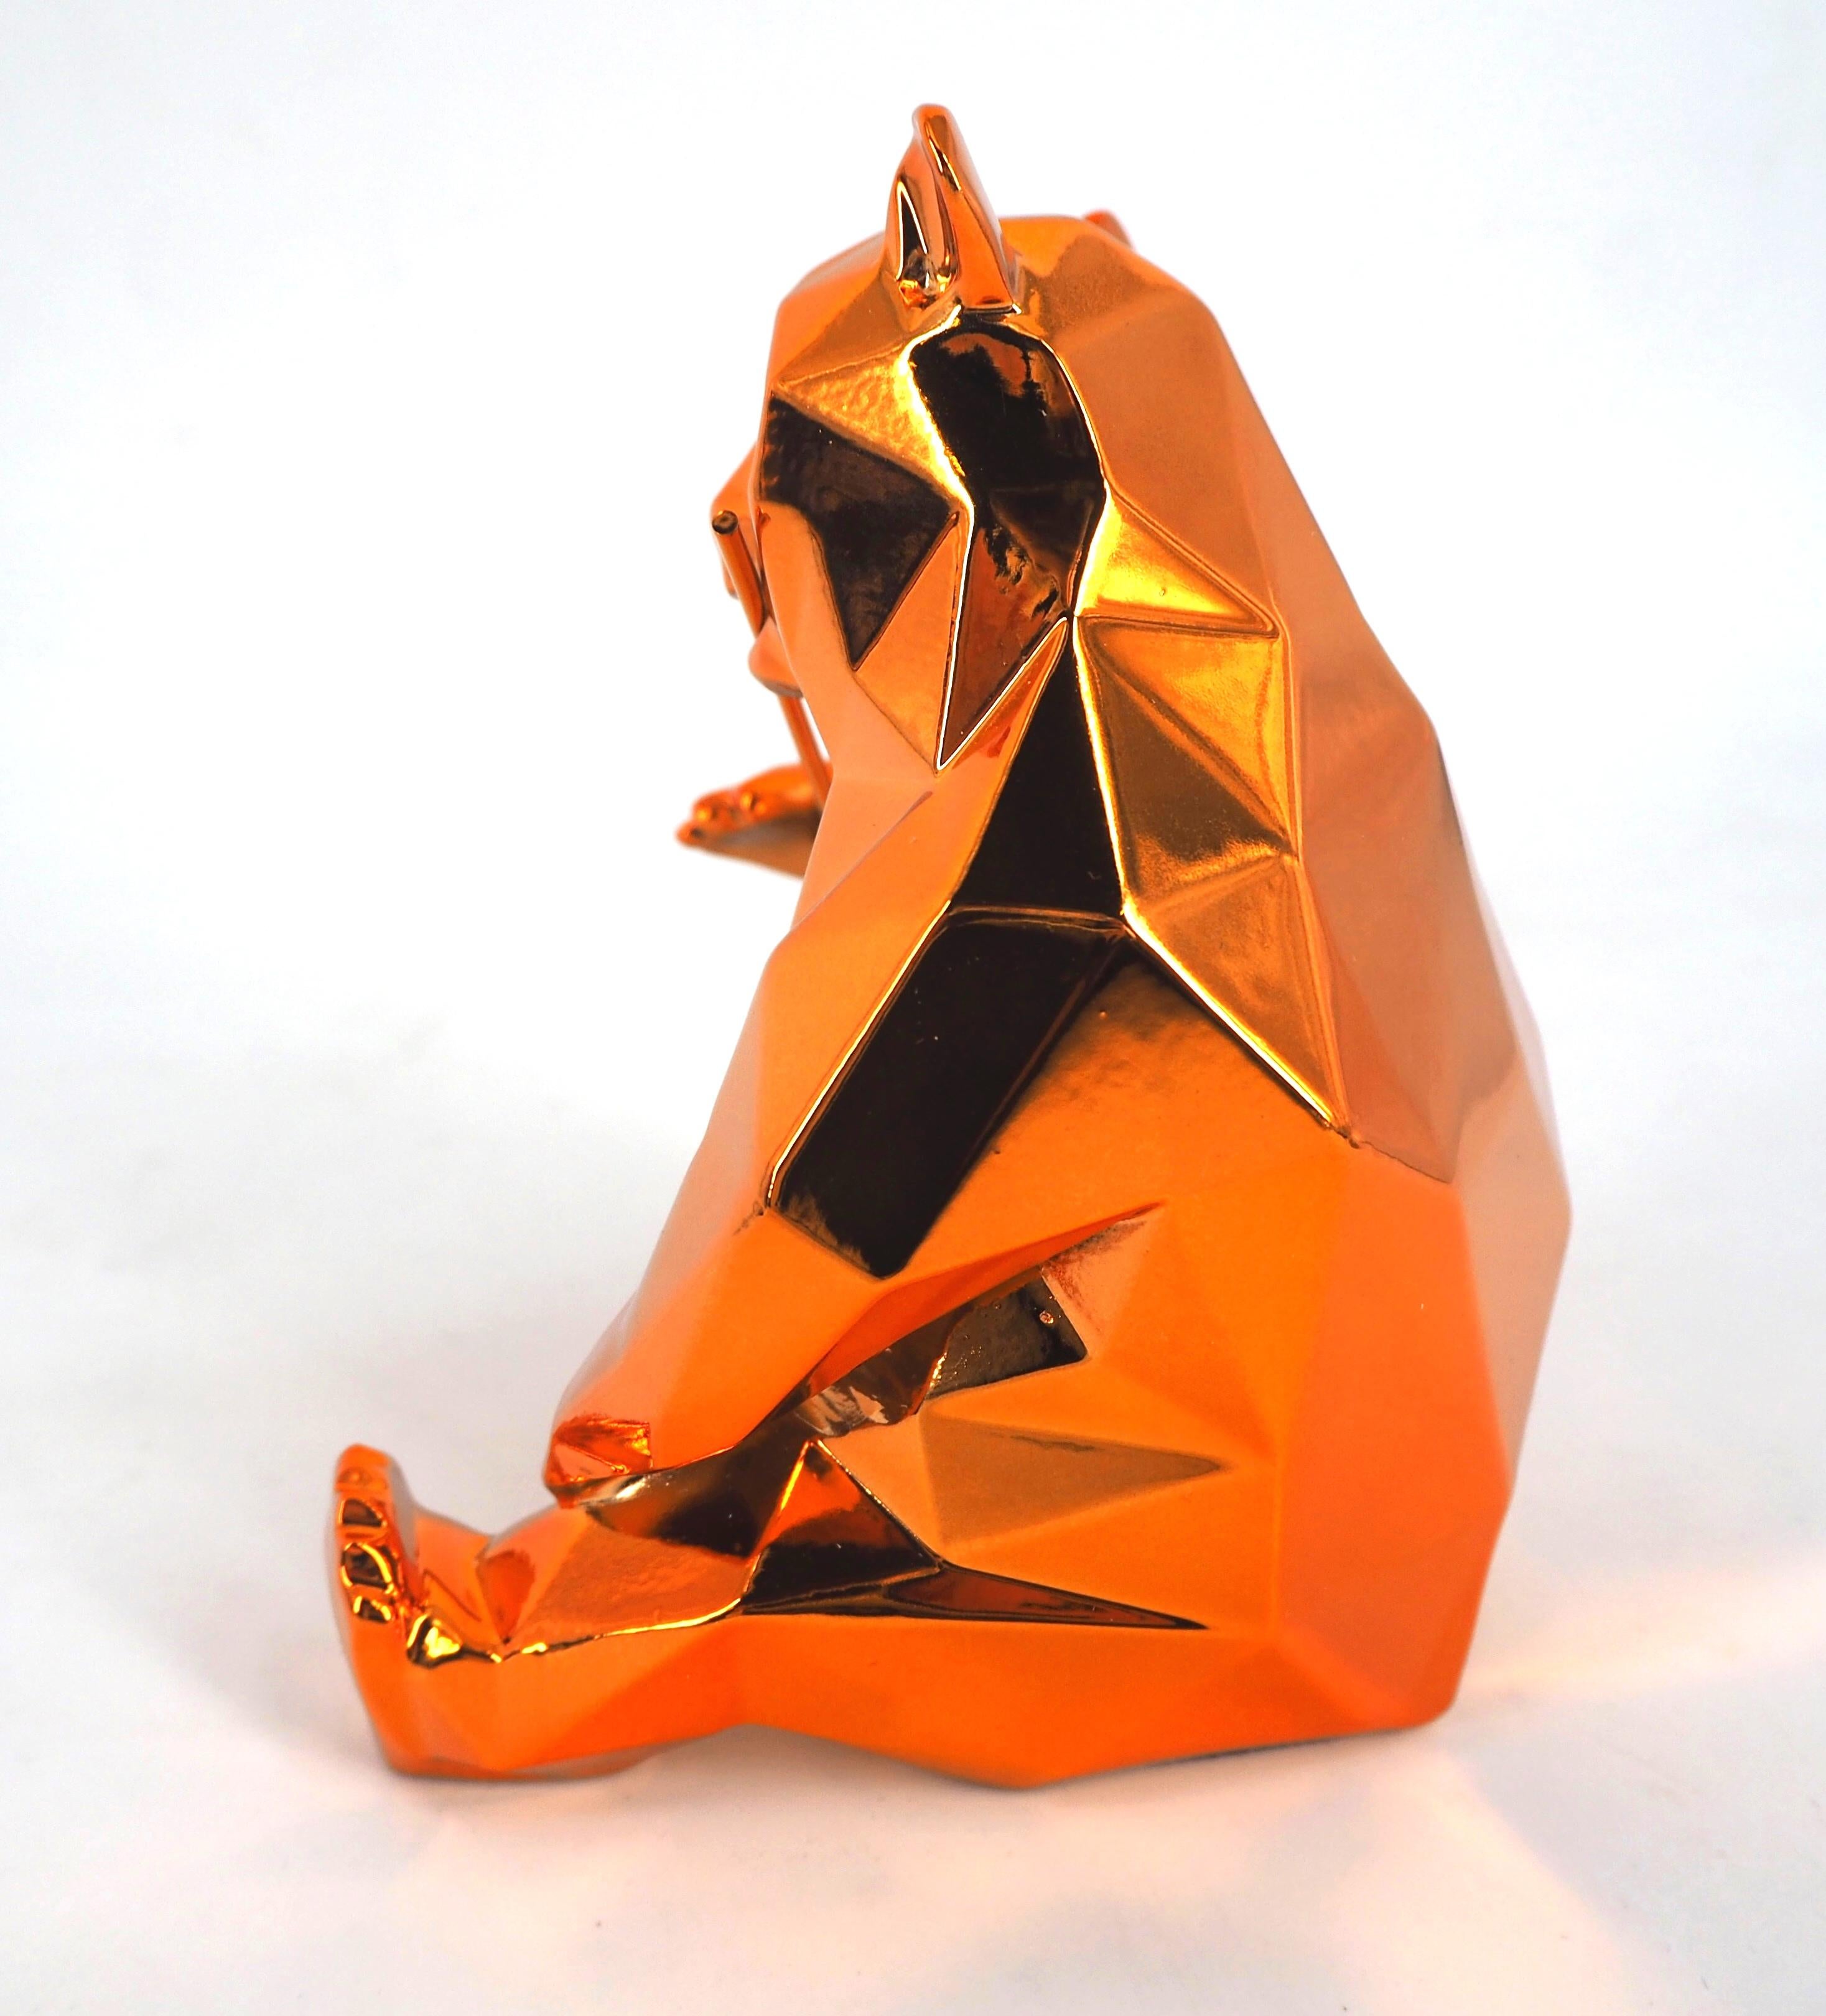 Richard ORLINSKI
Panda Spirit (Orange Edition)

Sculpture in resin
Metallic silver
About 13 x 11 x 9 cm (c. 5 x 4 x 3.5 in)
Presented in original box with certificate

Excellent condition